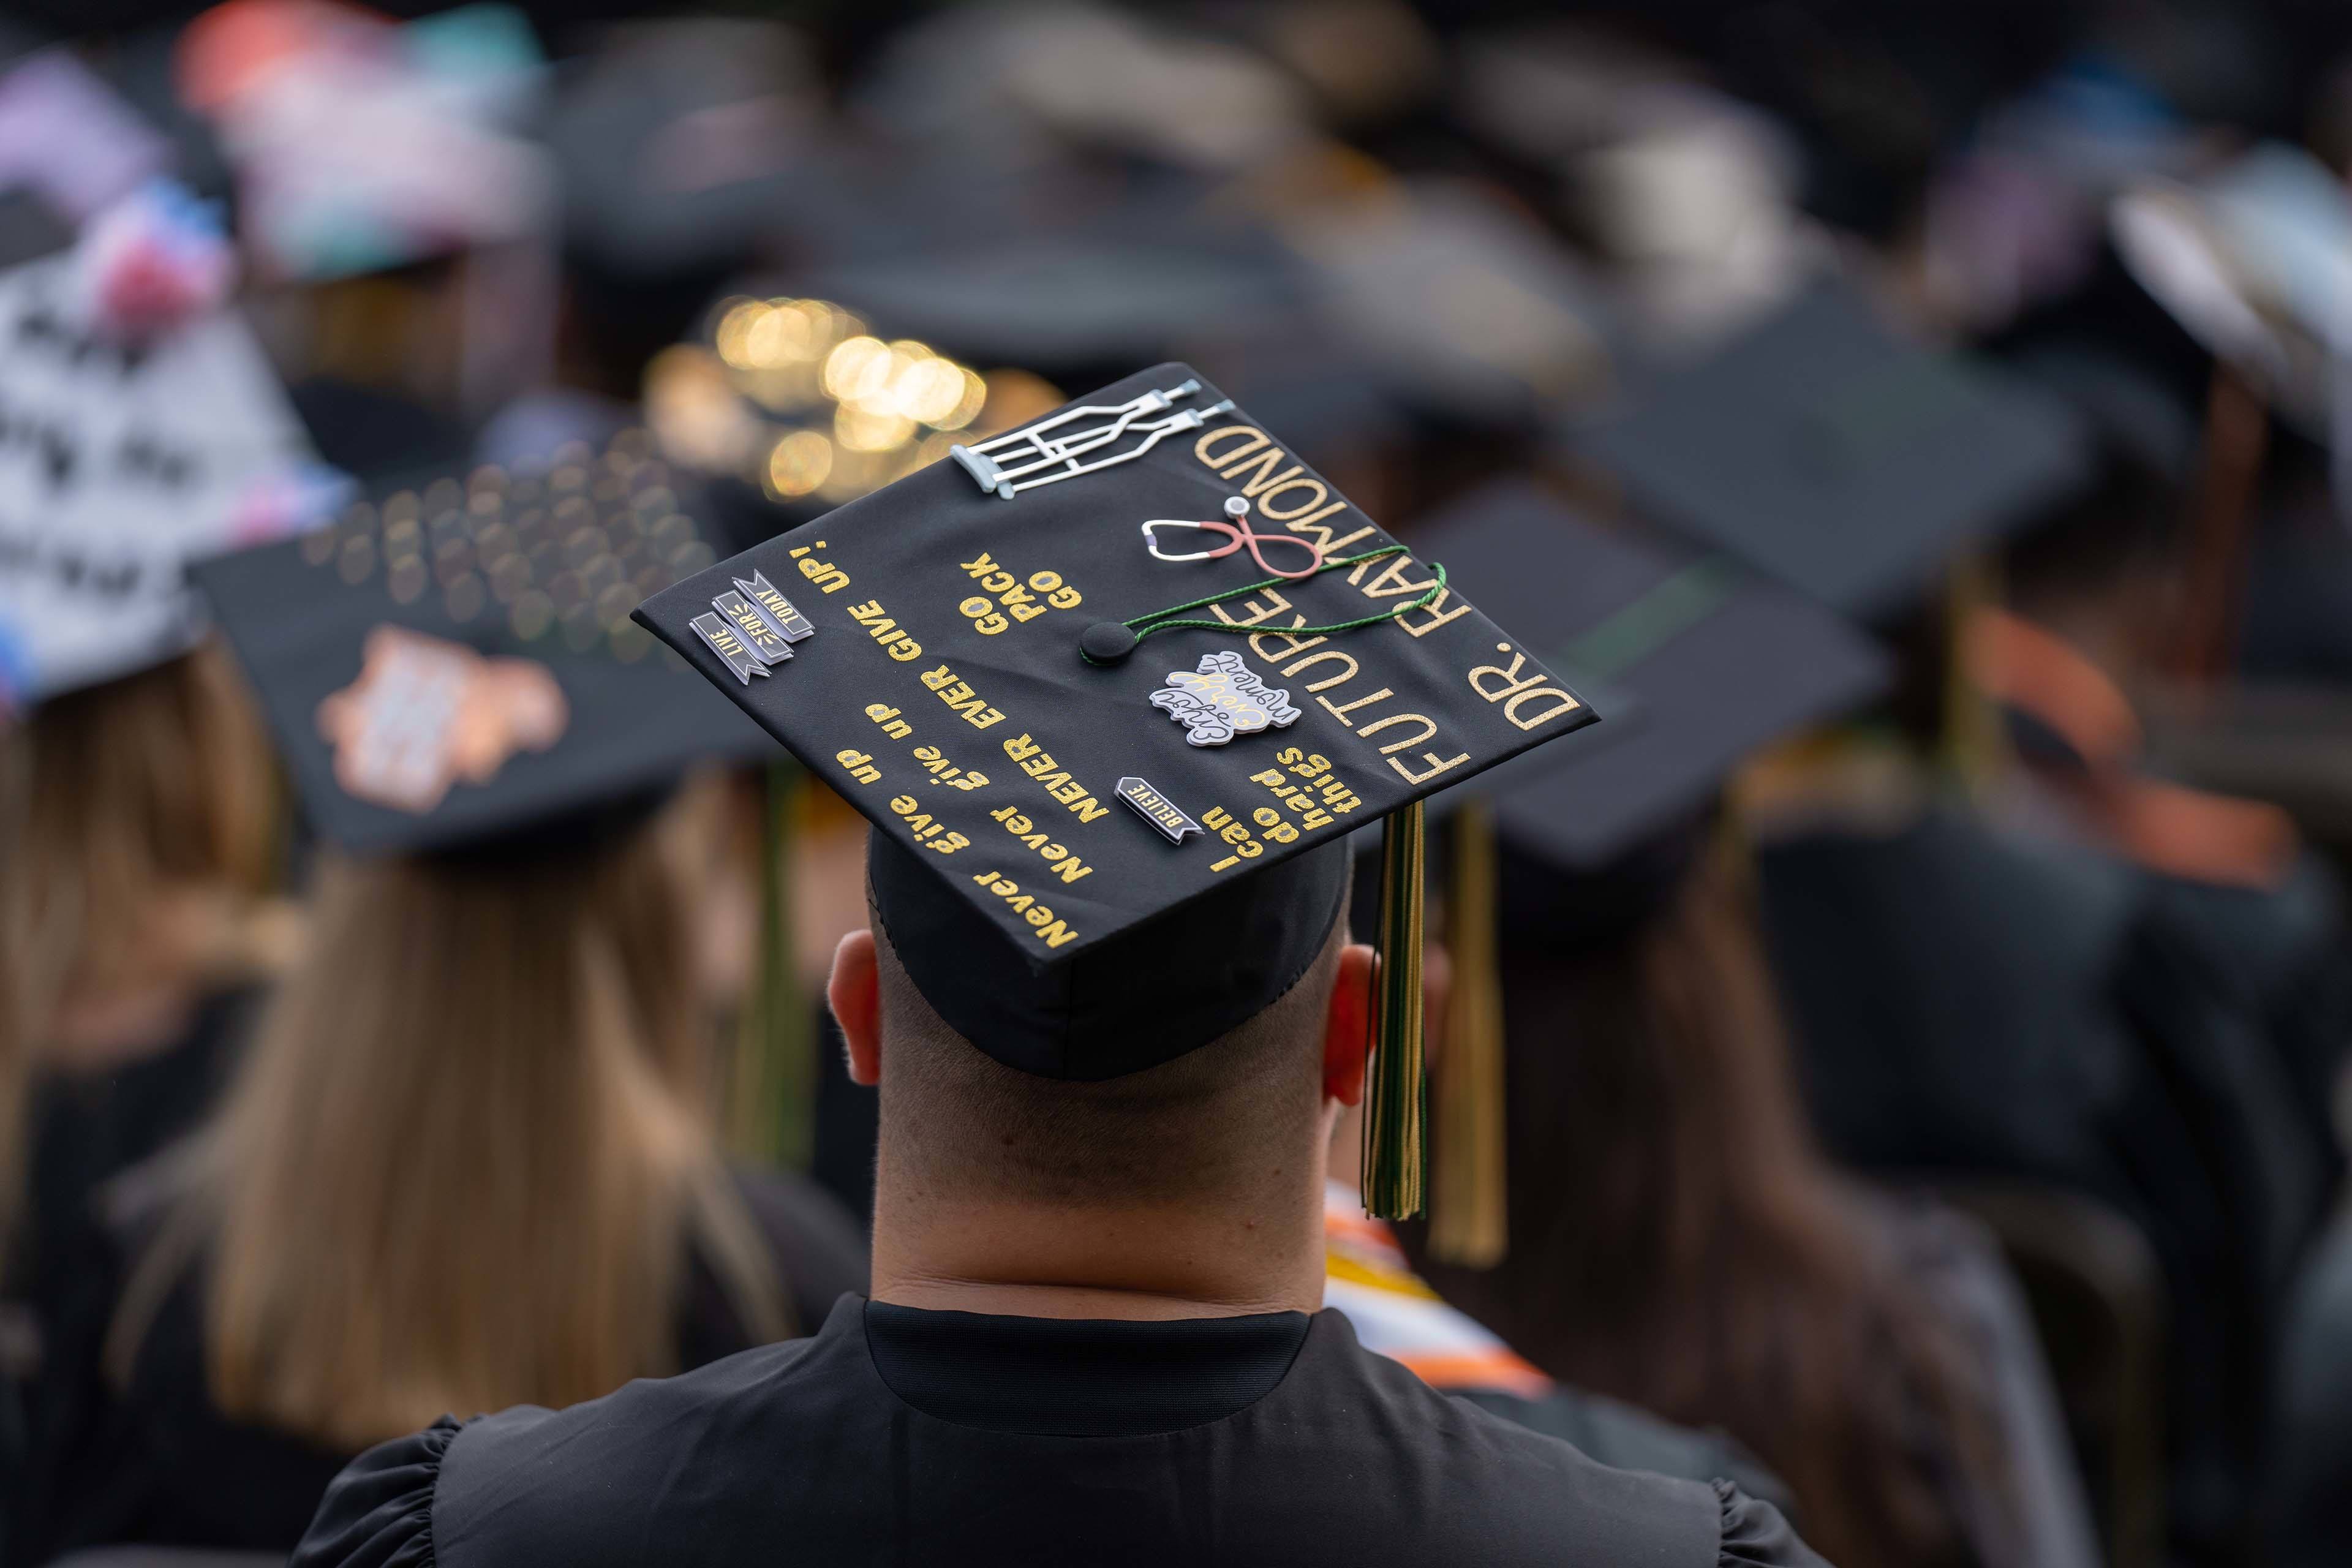 Graduation cap says, "Future Dr. Raymond" 